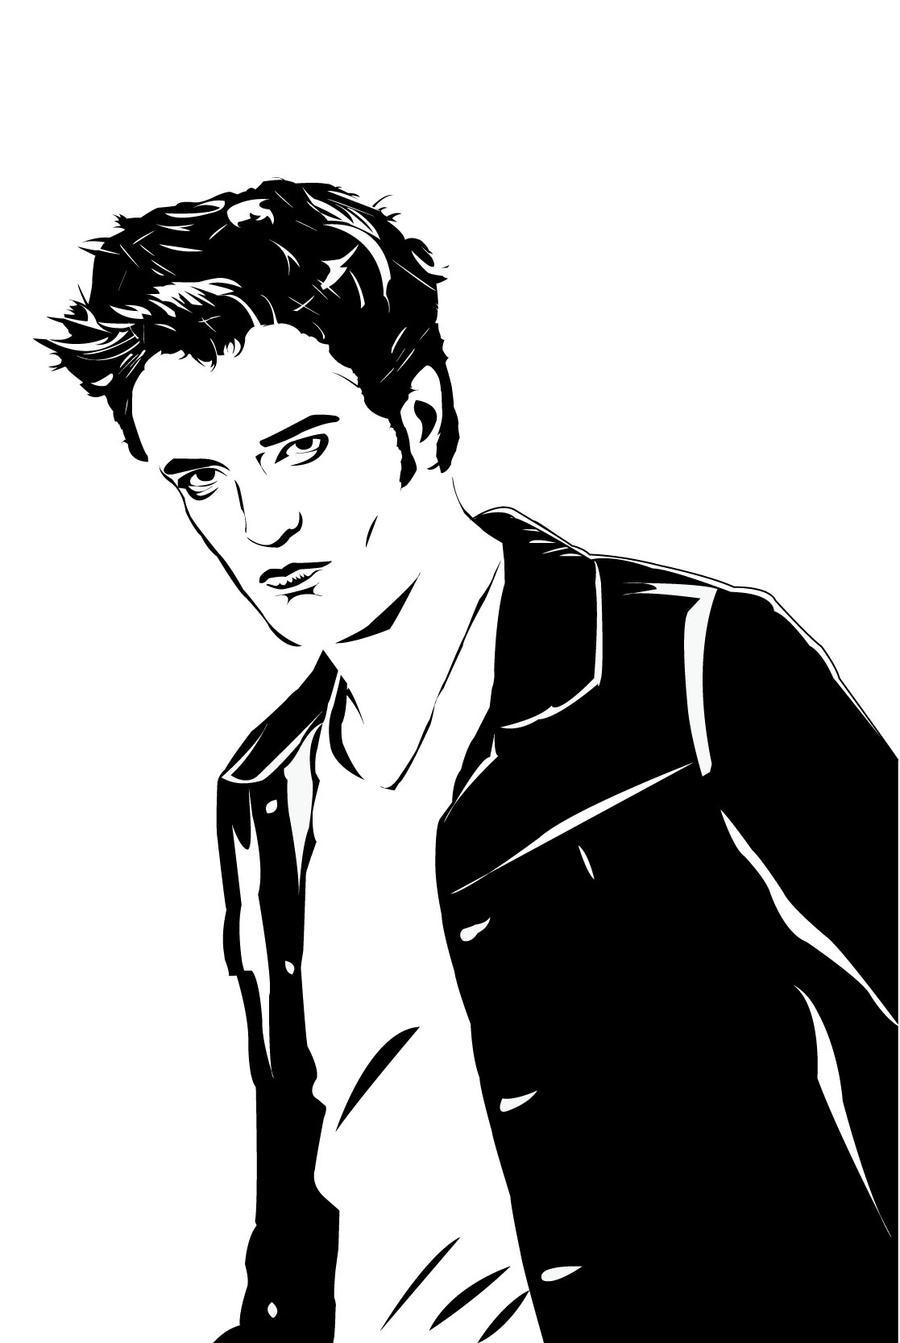 Download Edward Cullen Illustration by BAMbam-narusaku on DeviantArt